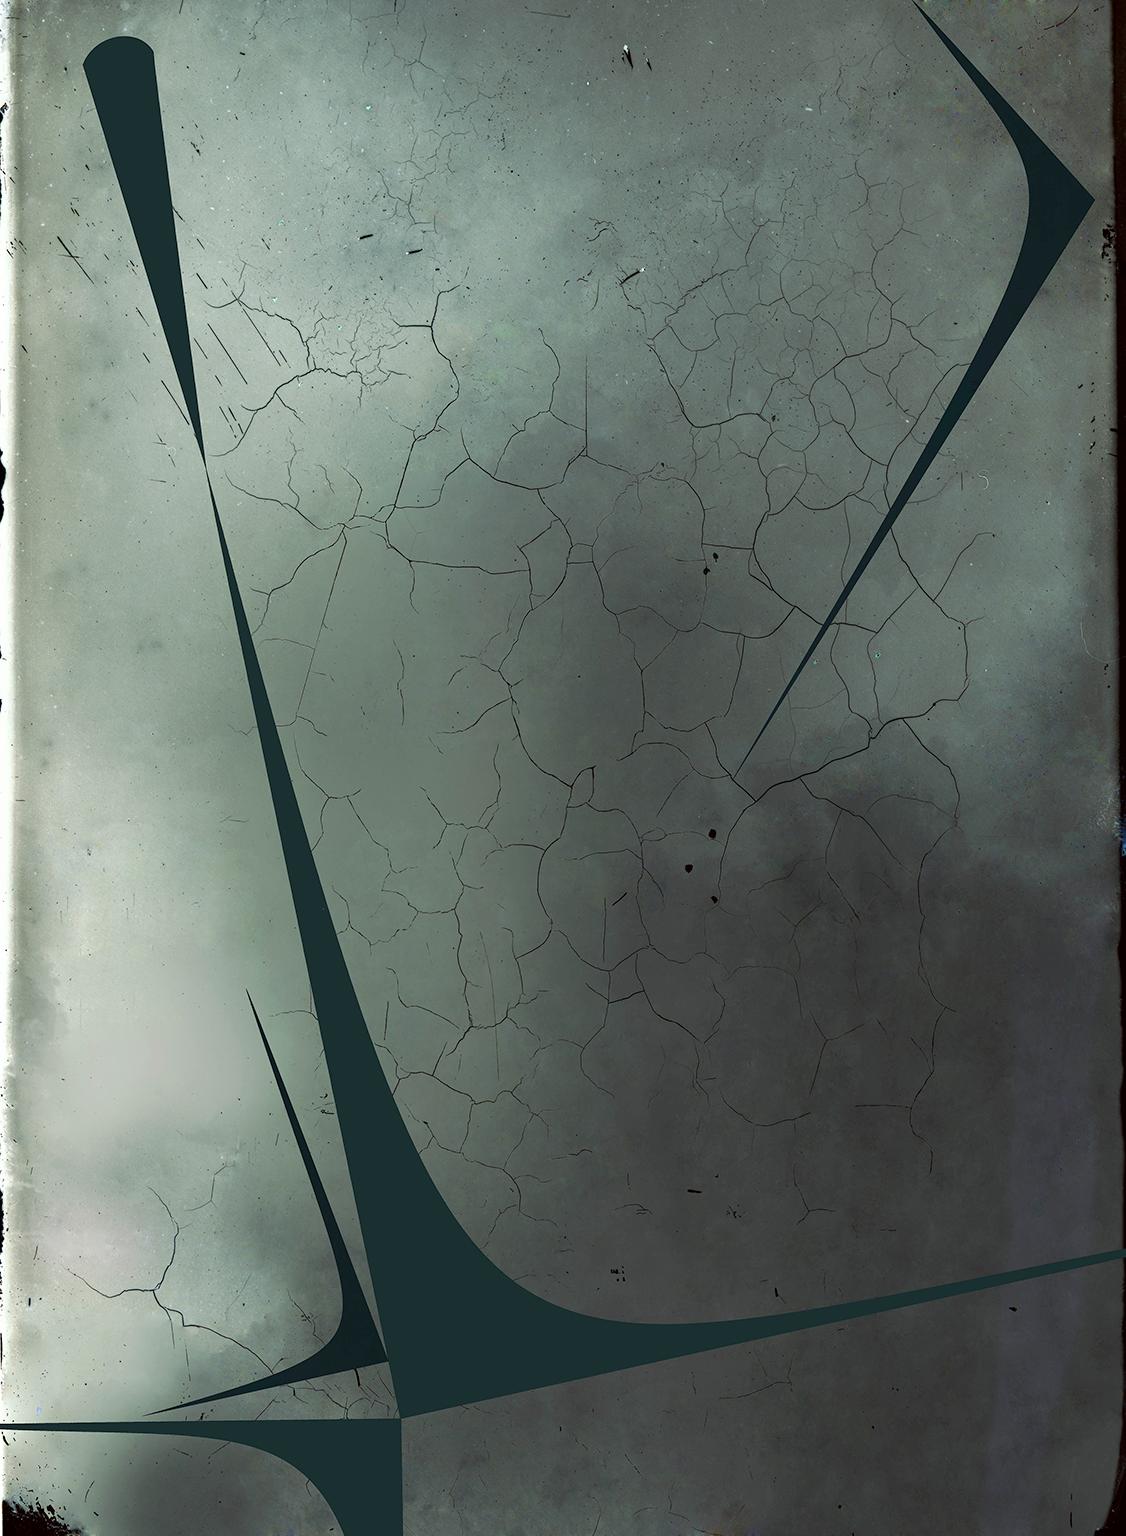 Luis Gonzalez Palma Abstract Photograph - "Haiku 9" abstract photograph on aluminum geometric constructivist